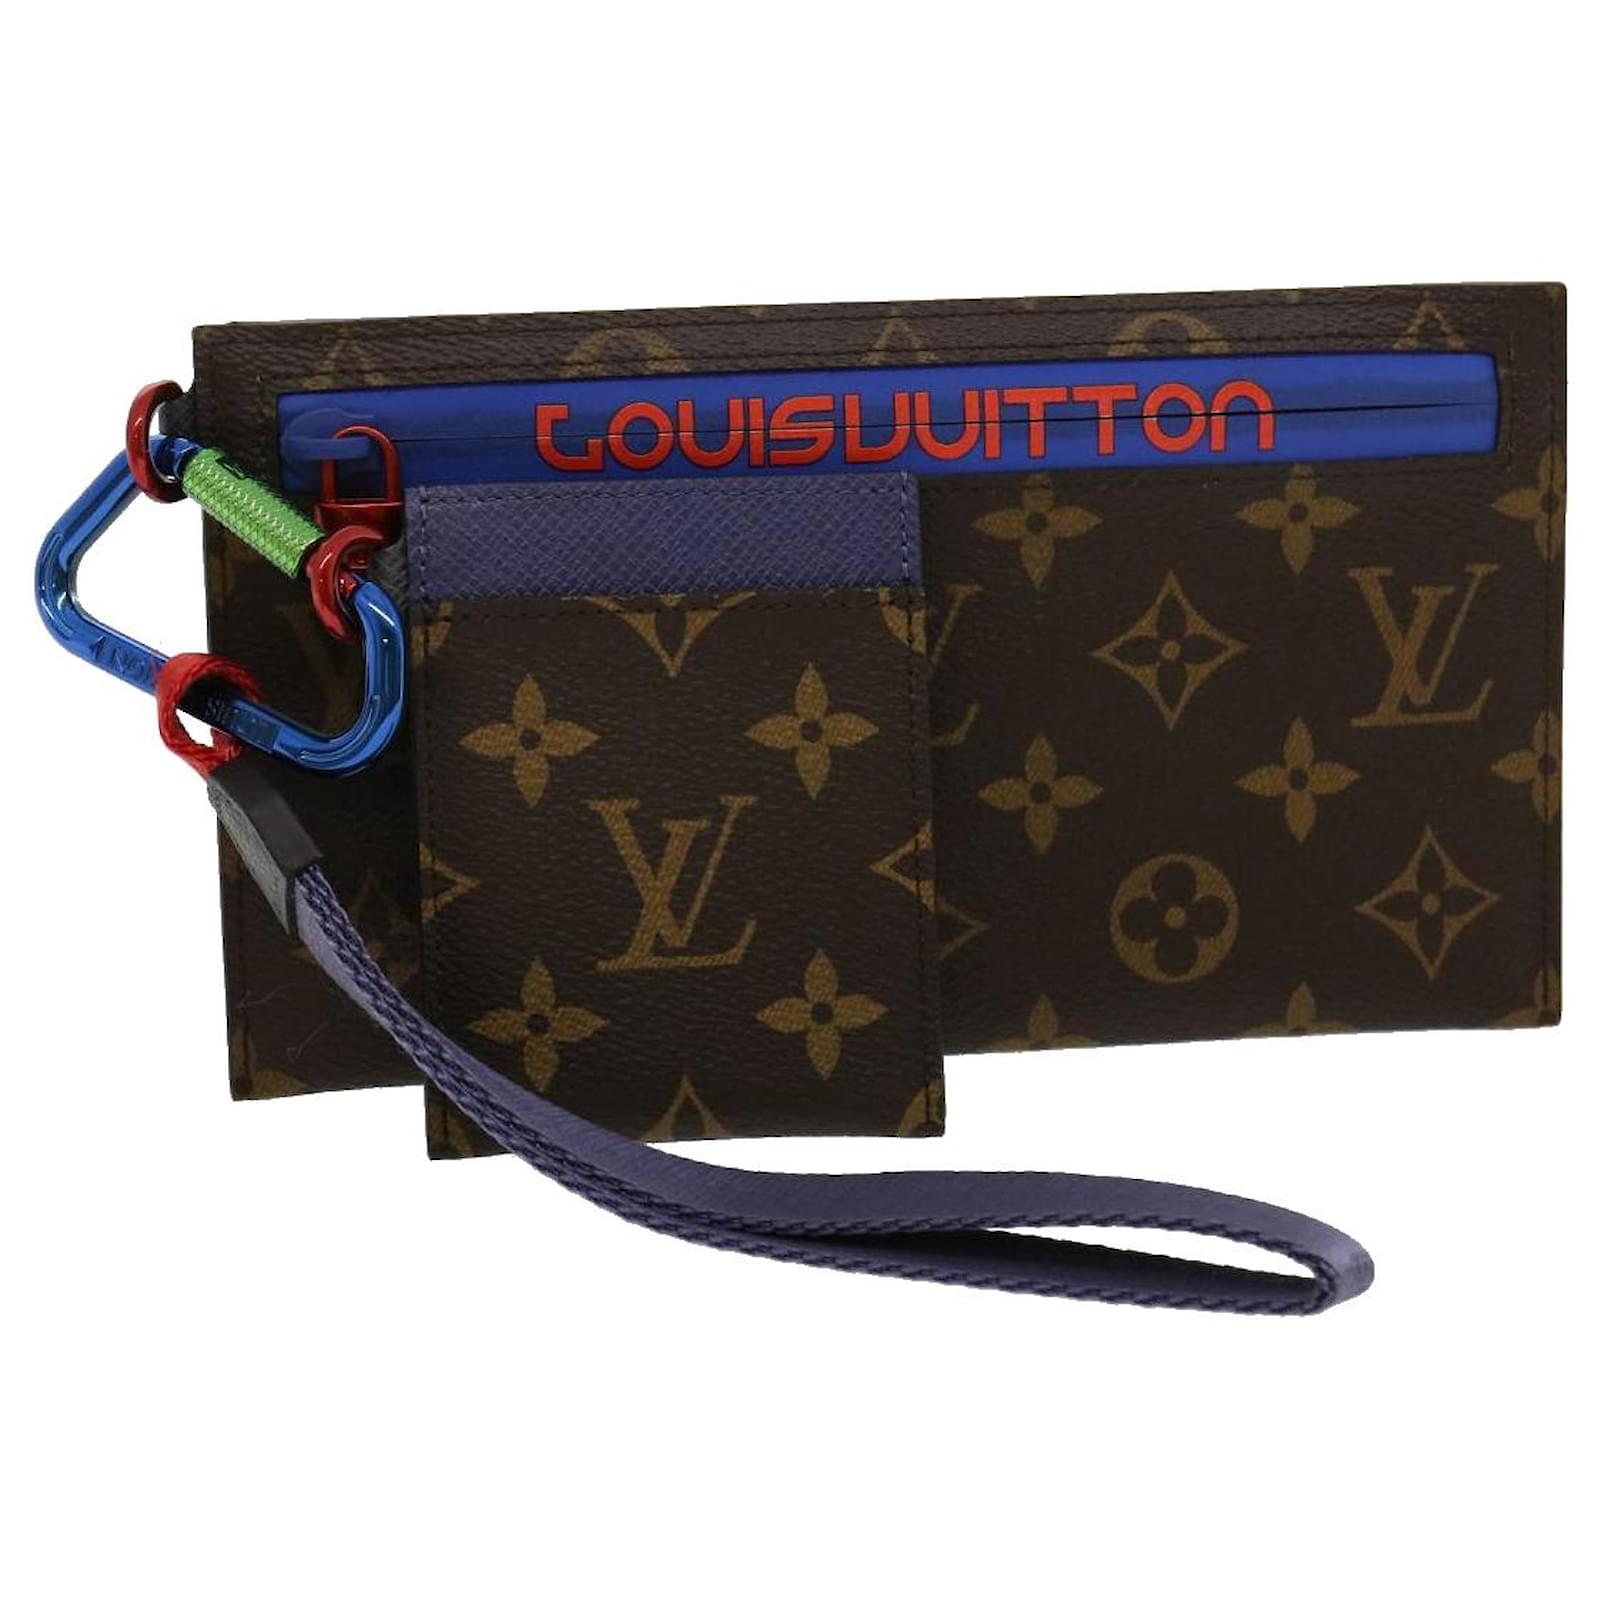 Louis Vuitton damier clutch |